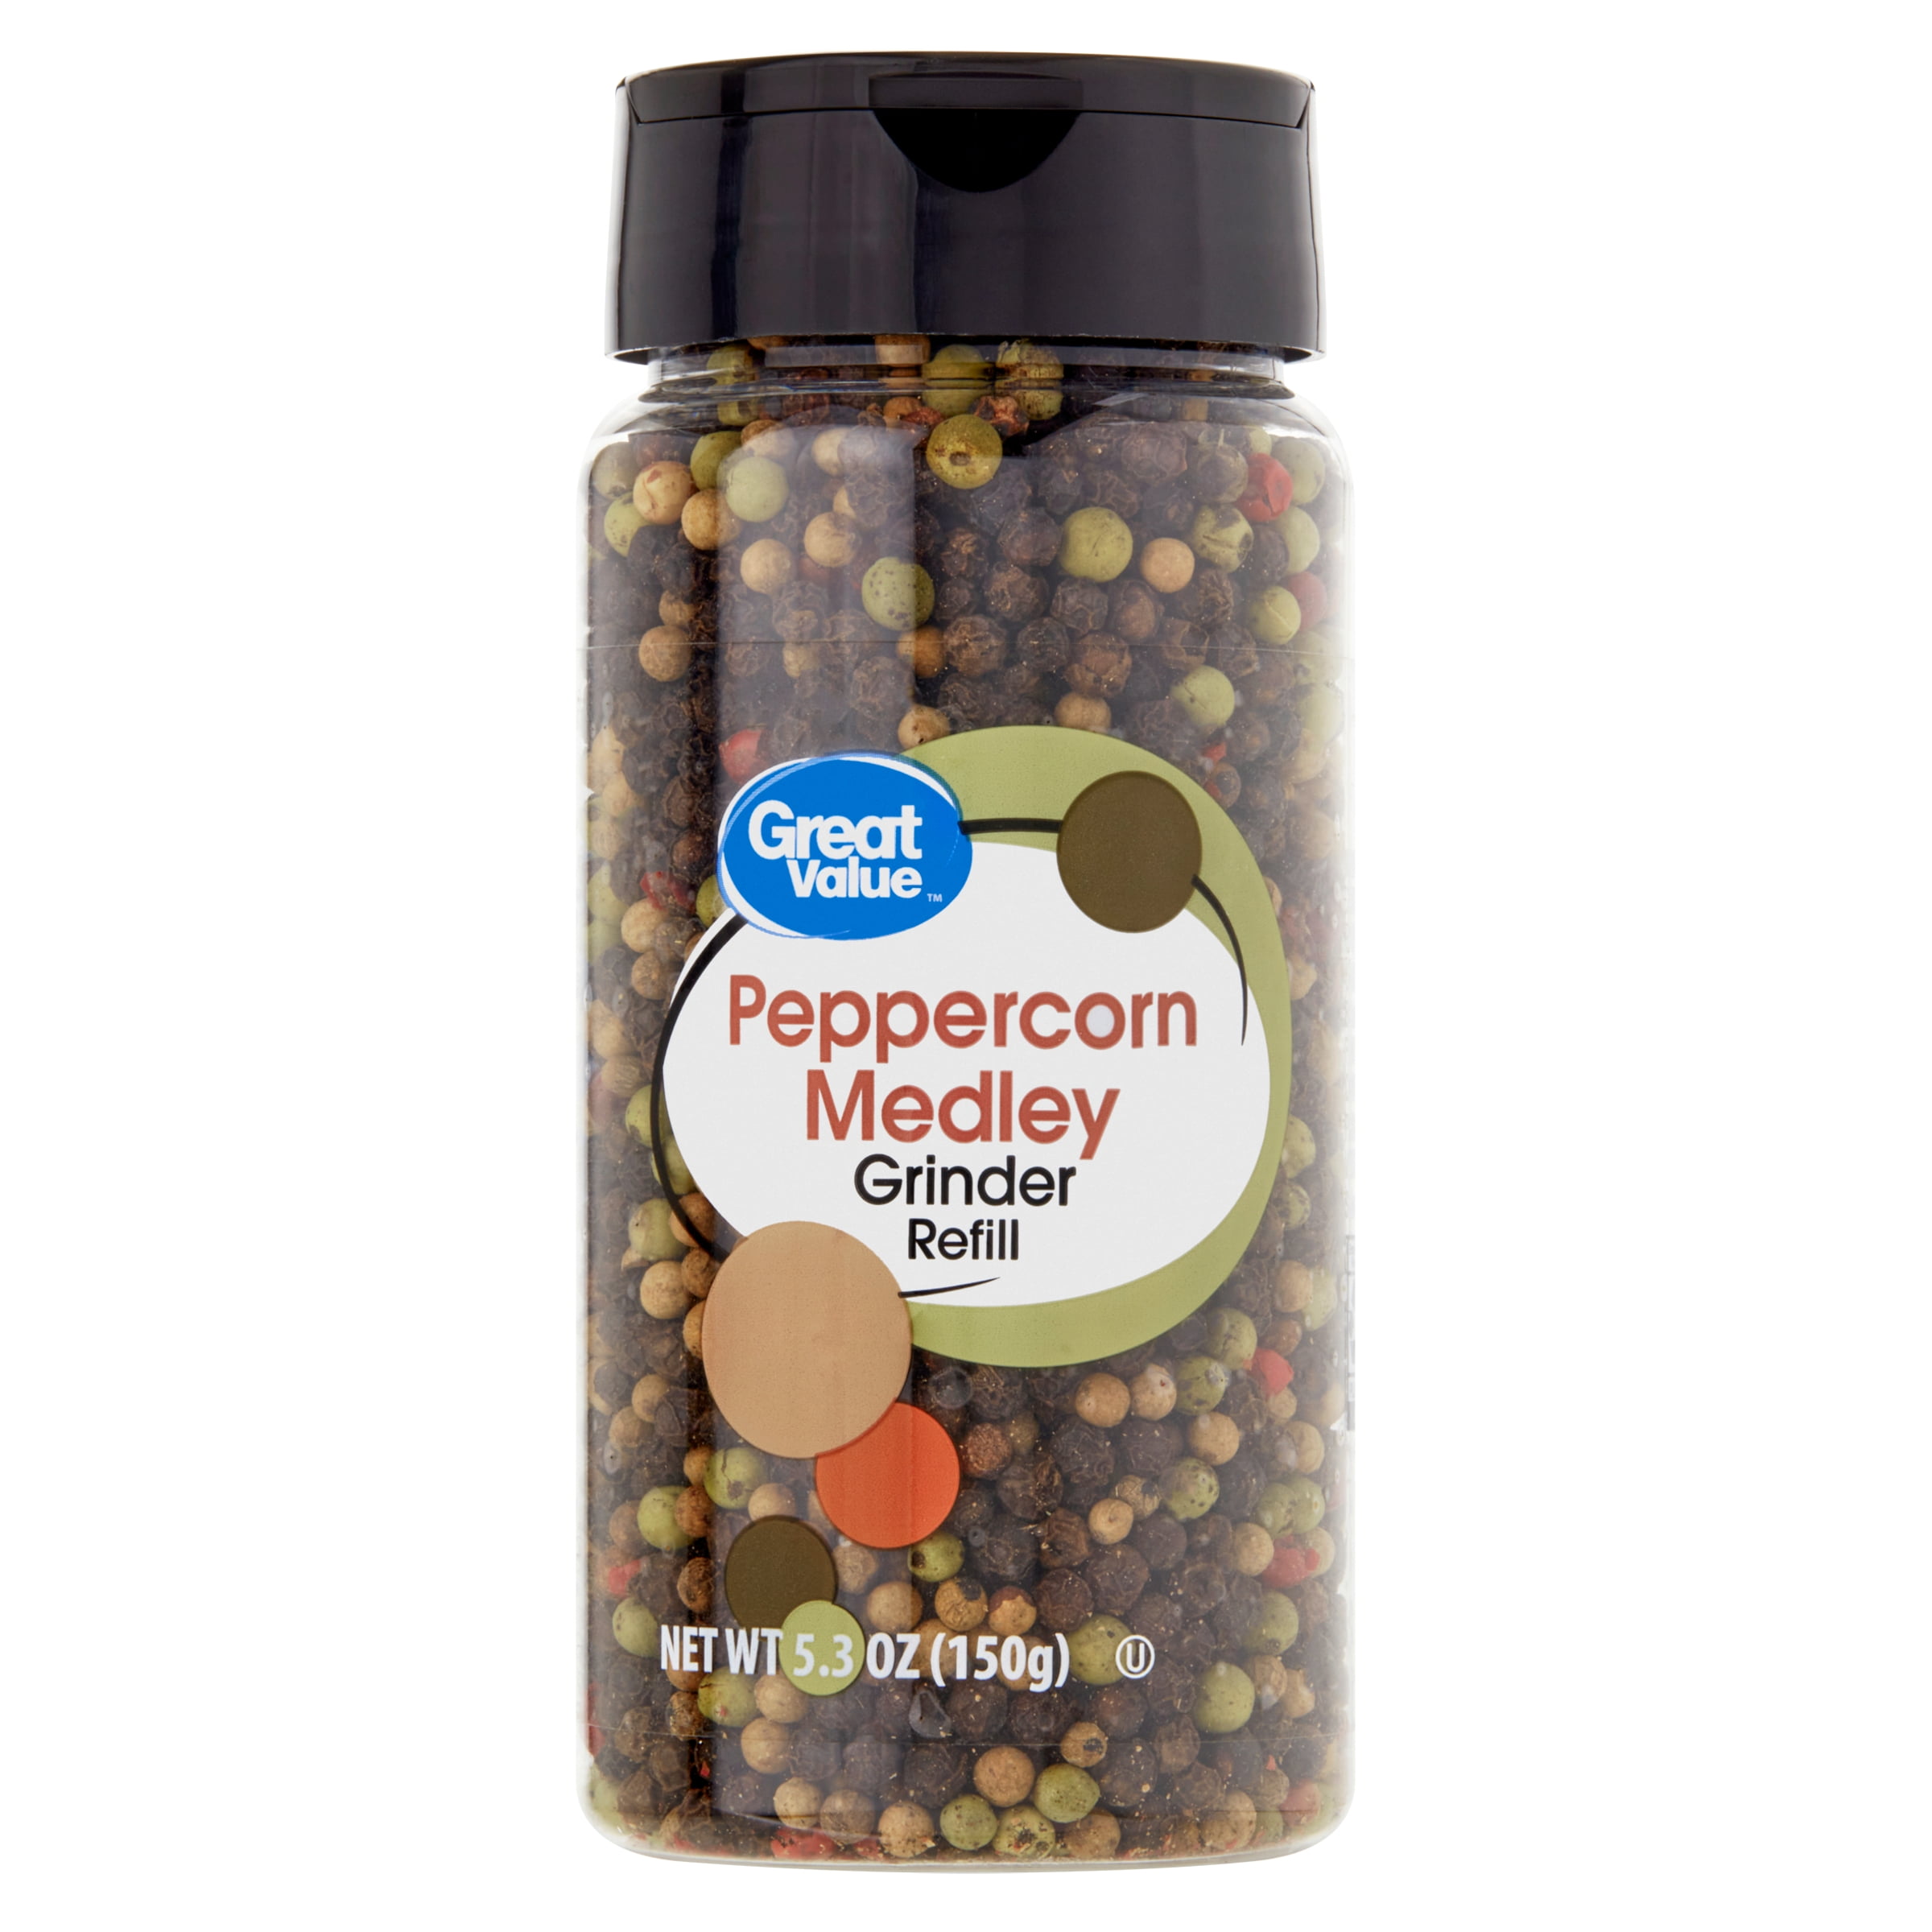 Great Value Peppercorn Medley Grinder Refill, 5.3 oz